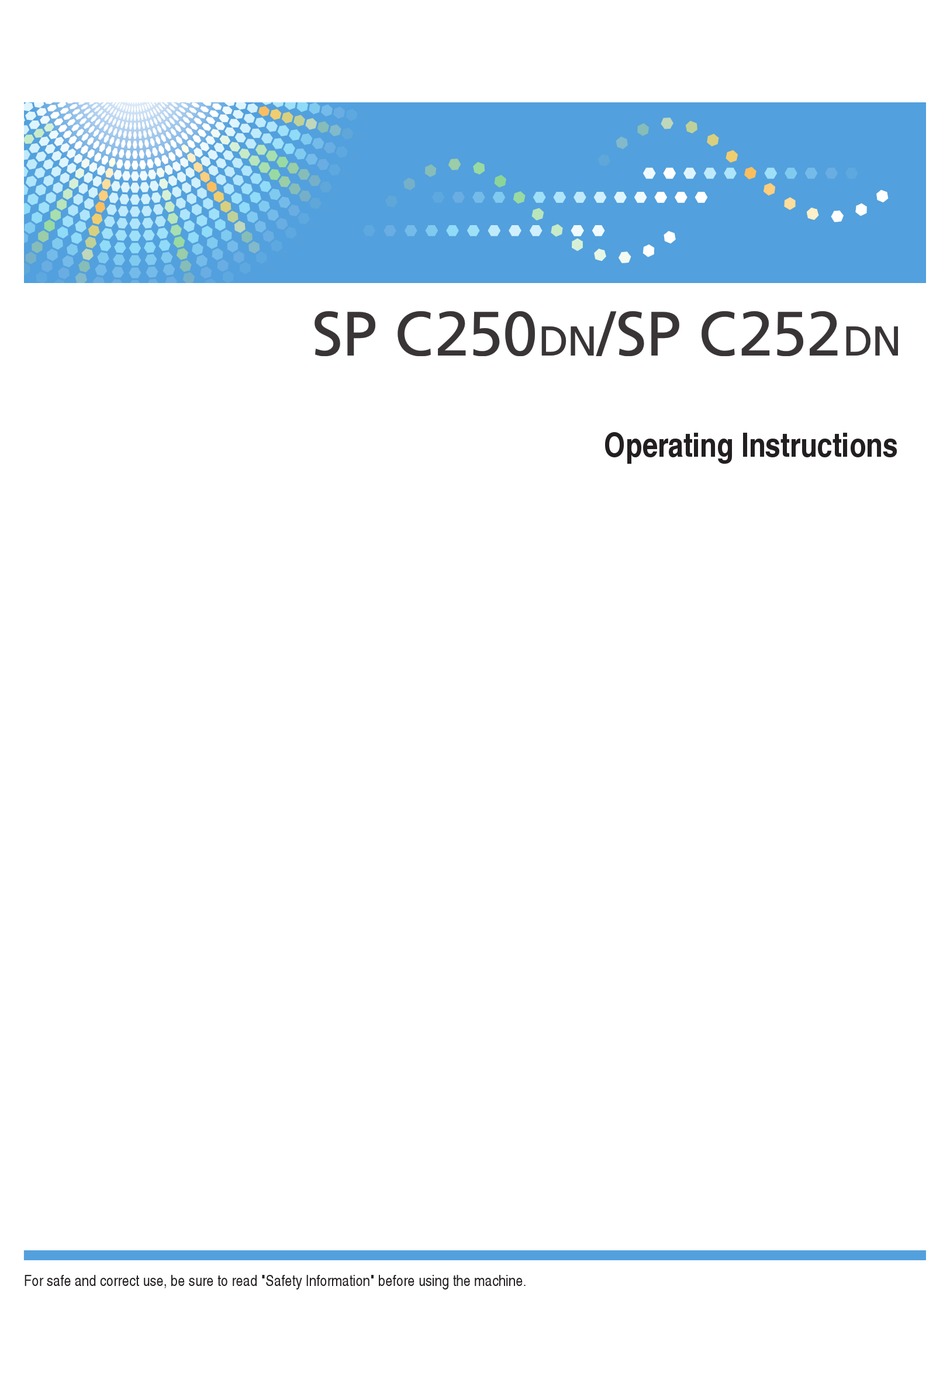 Ricoh Sp C250dn Operating Instructions Manual Pdf Download Manualslib